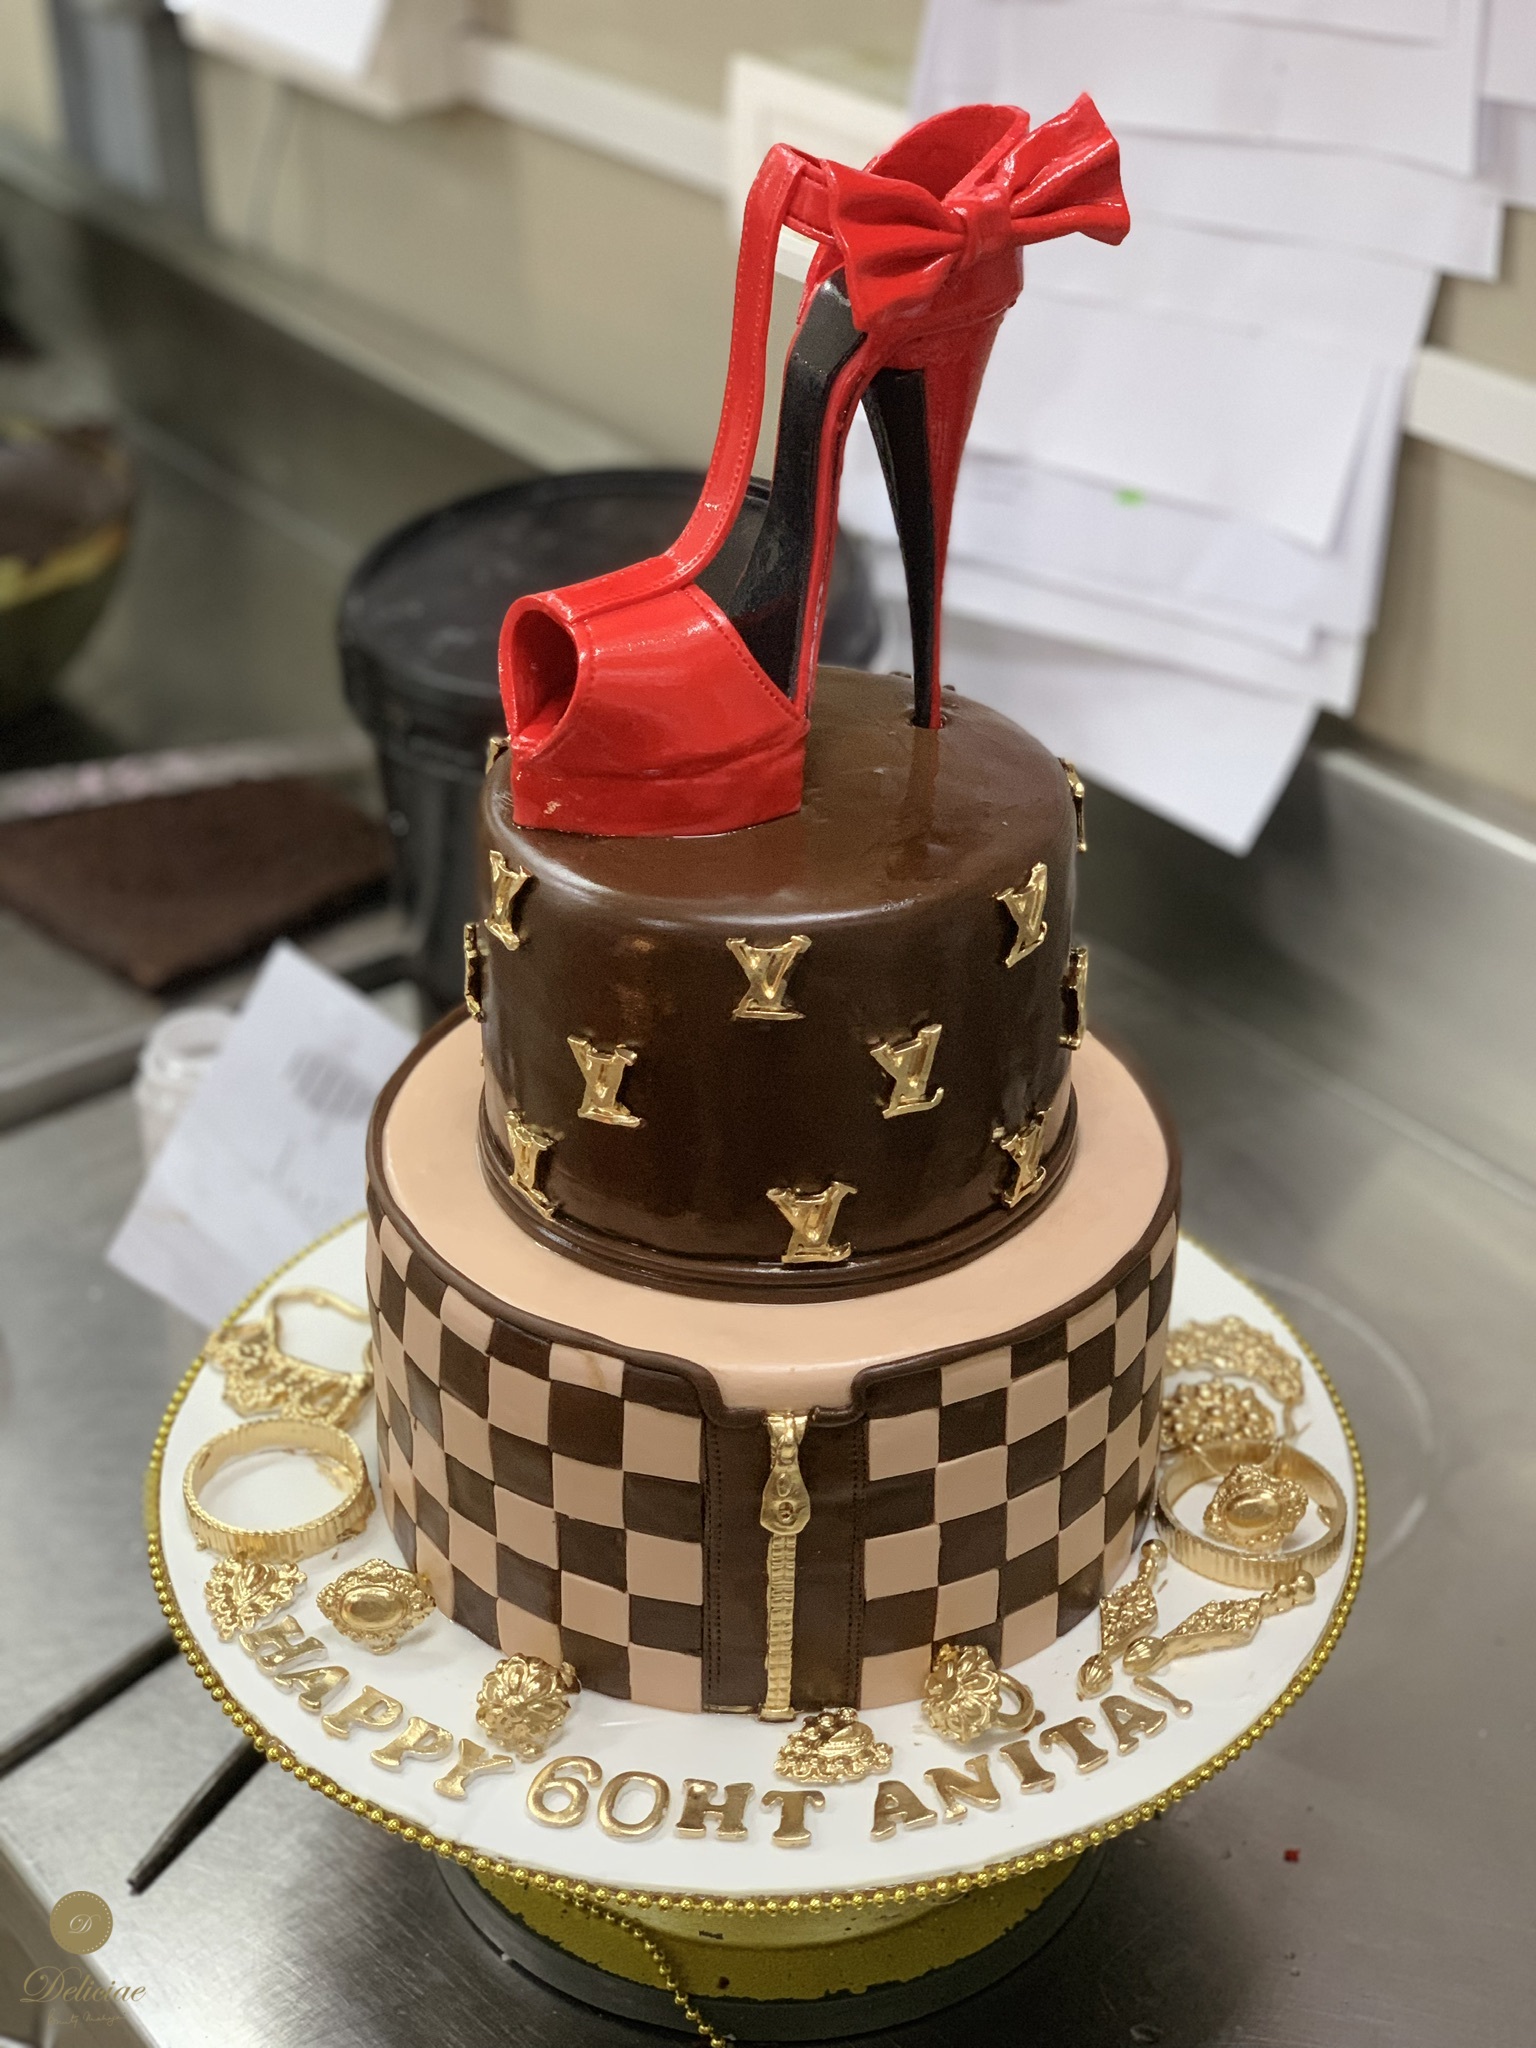 LV Cake  Fondant cake designs, Louis vuitton cake, Birthday cakes for women